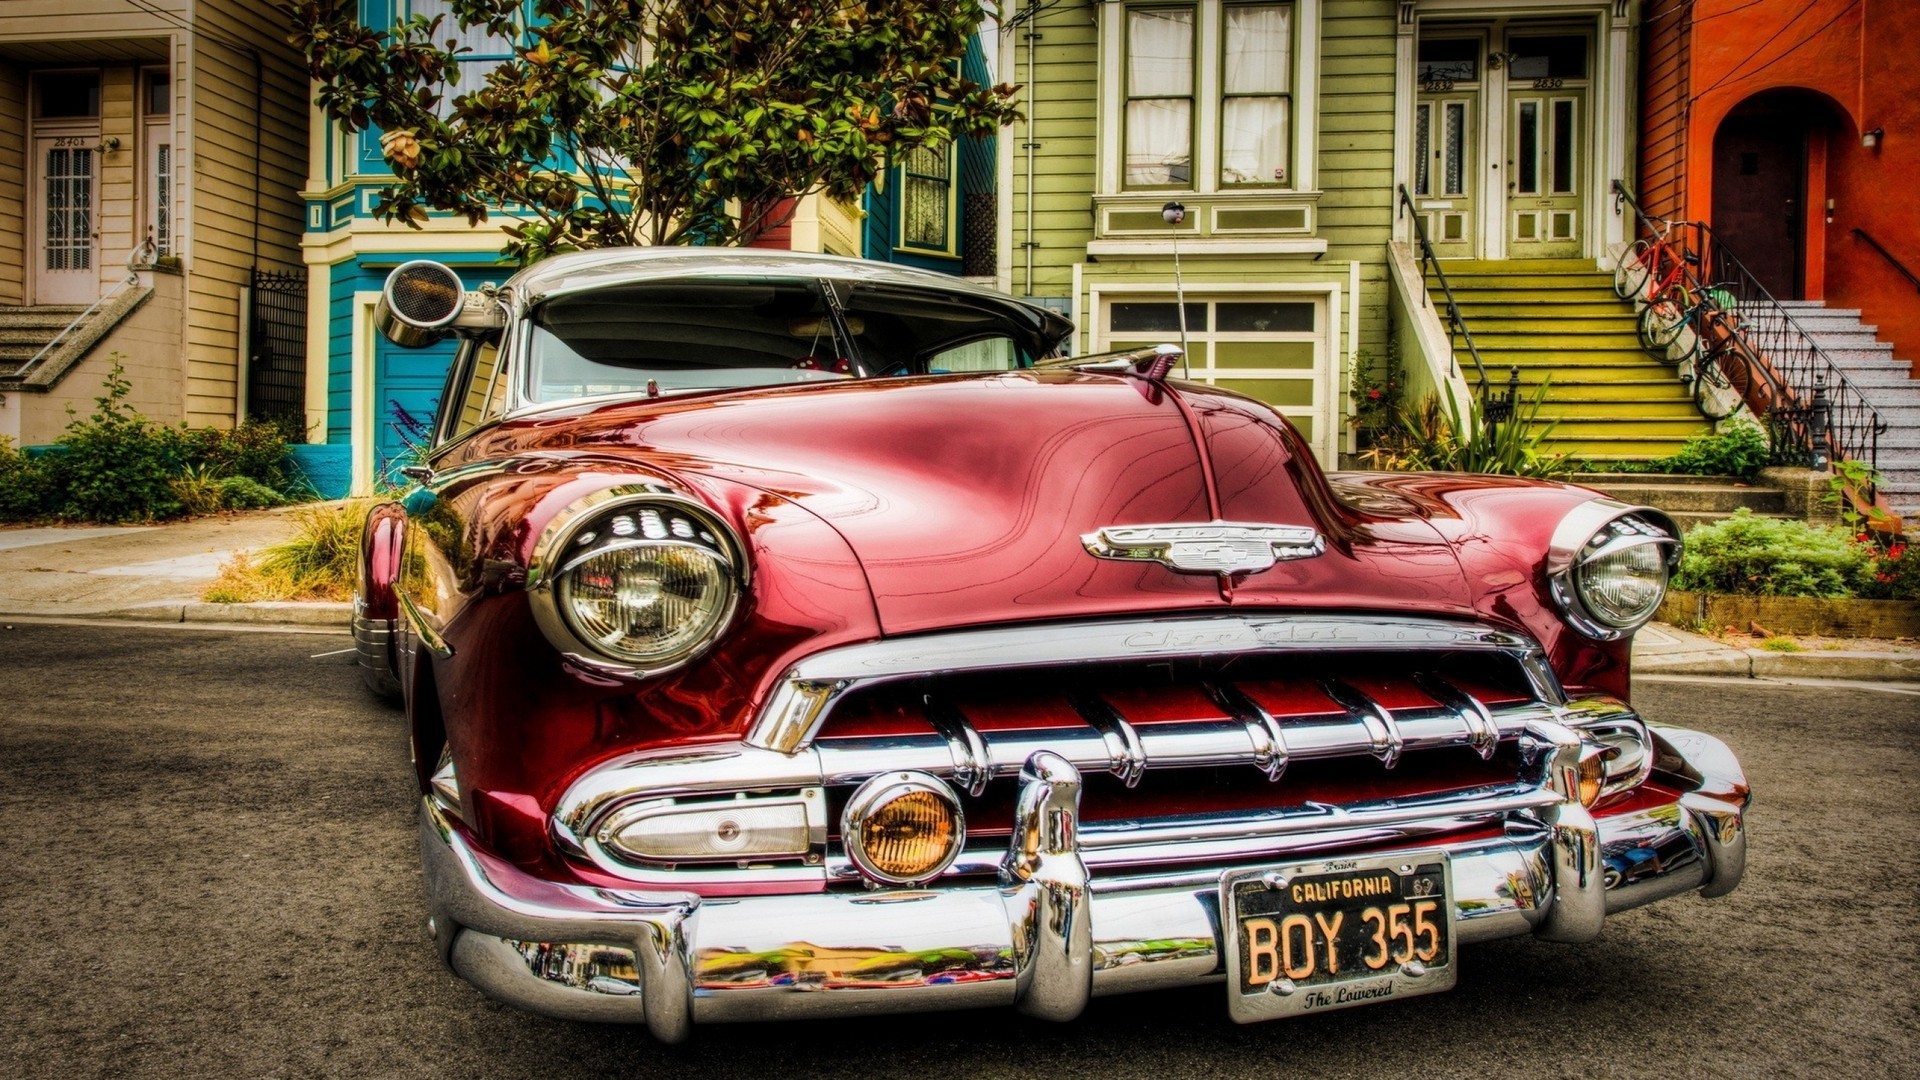 Chevrolet, Vintage, Car, Oldtimer, Red Cars, Vehicle, Trees, House, Urban Wallpaper